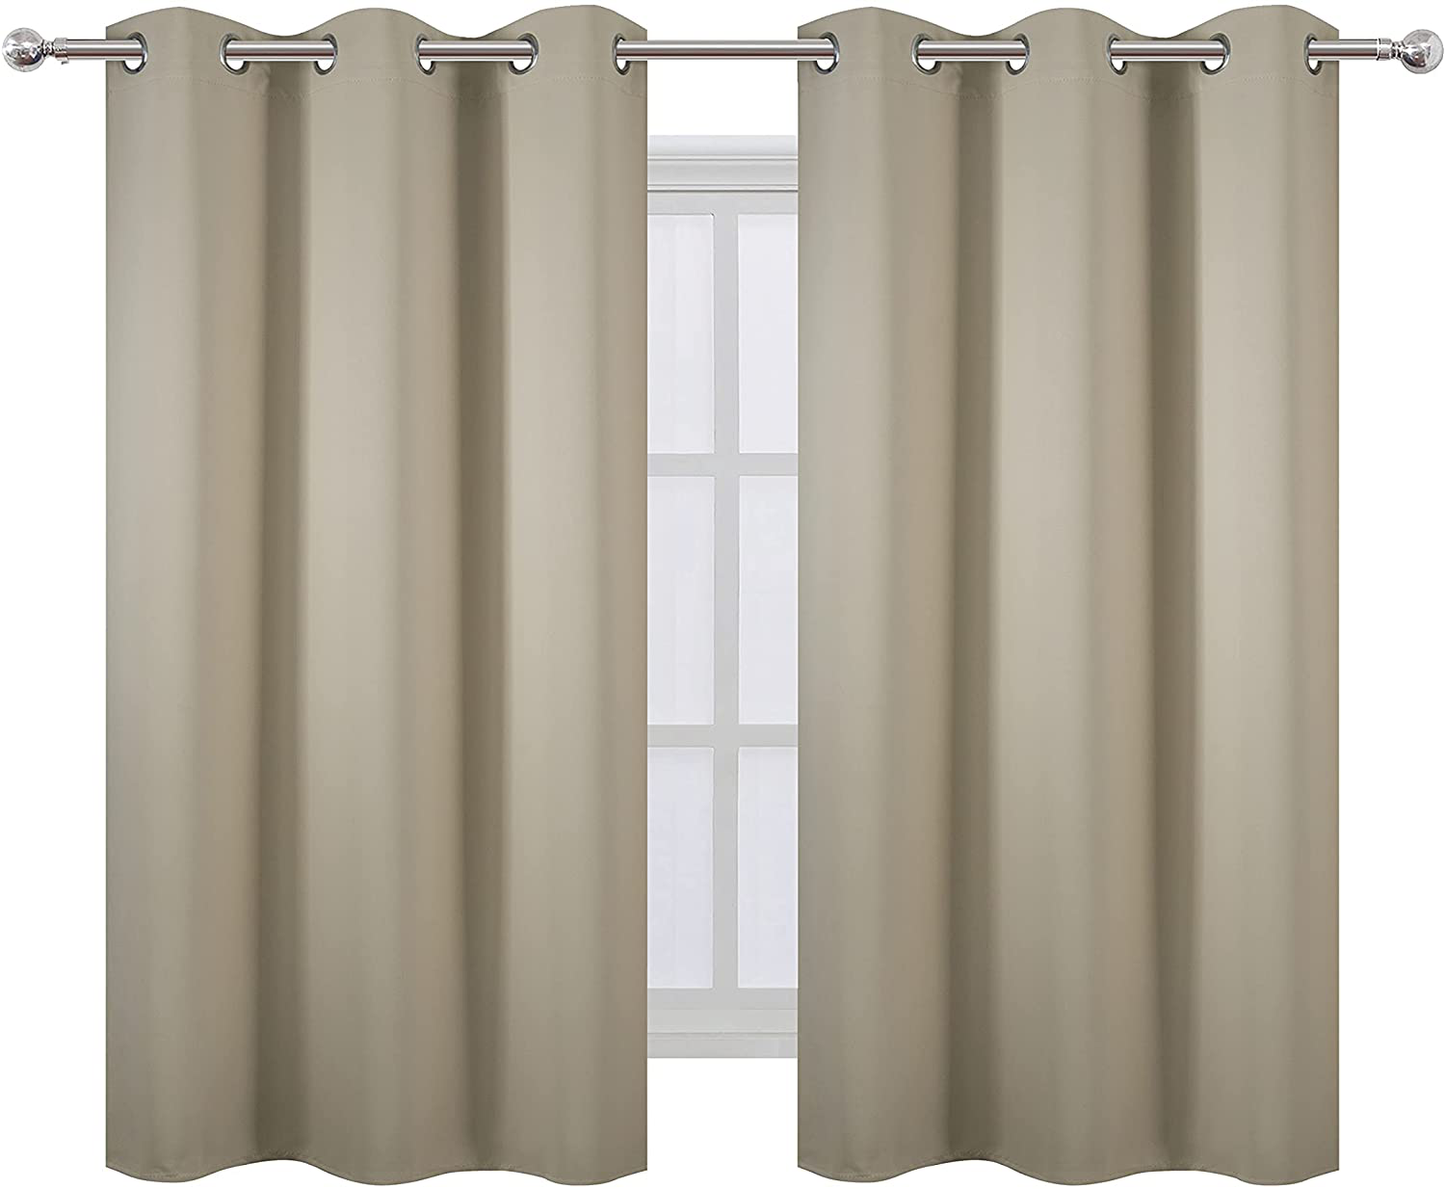 LEMOMO Yellow Thermal Blackout Curtains/52 x 72 Inch/Set of 2 Panels Room Darkening Curtains